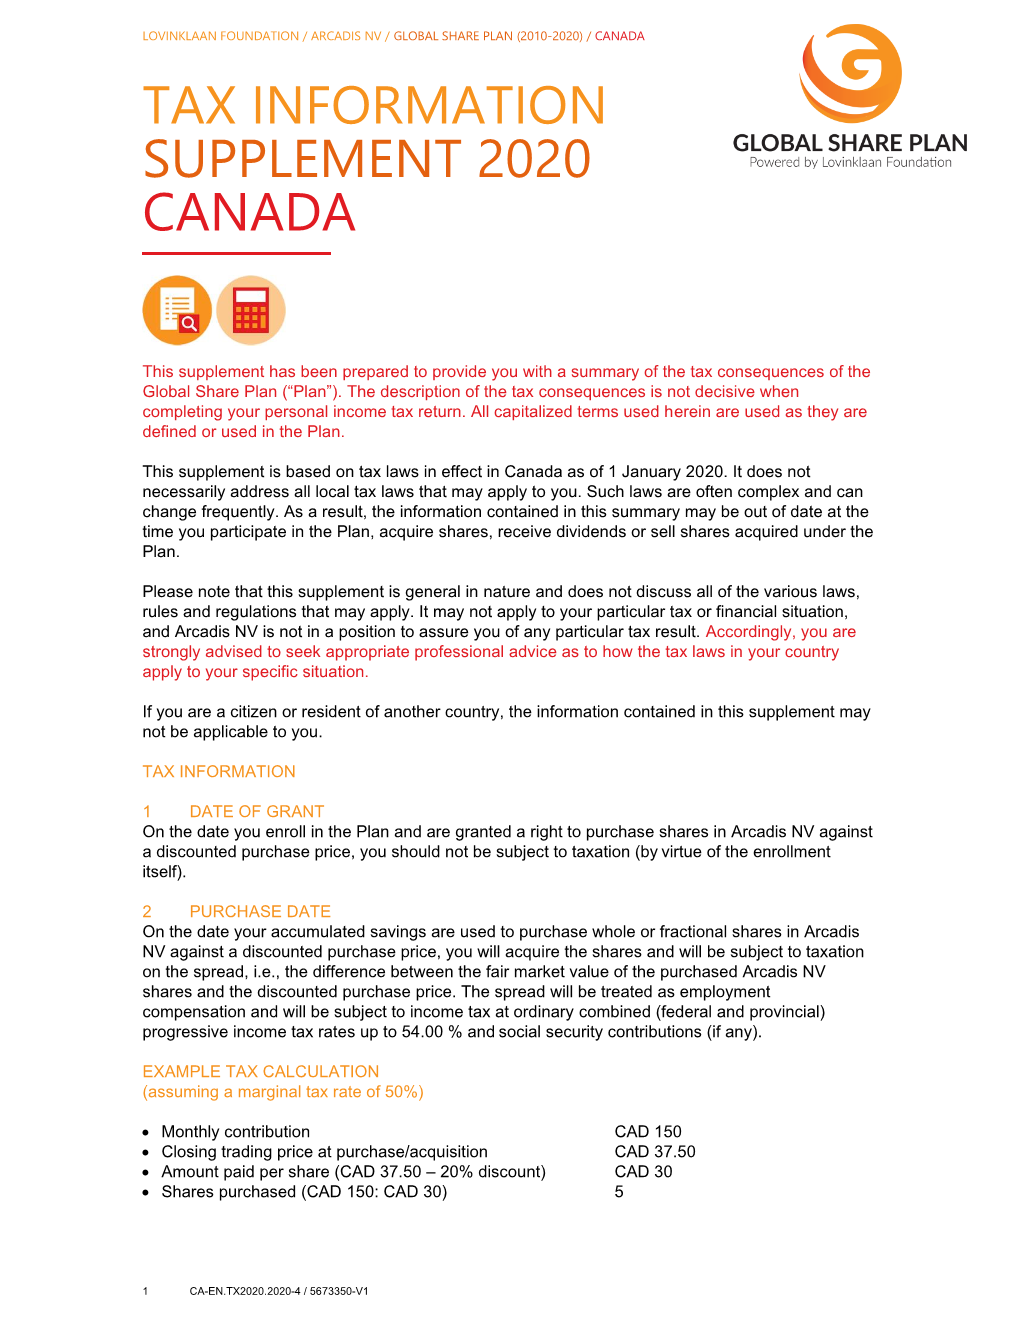 Tax Information Supplement 2020 Canada